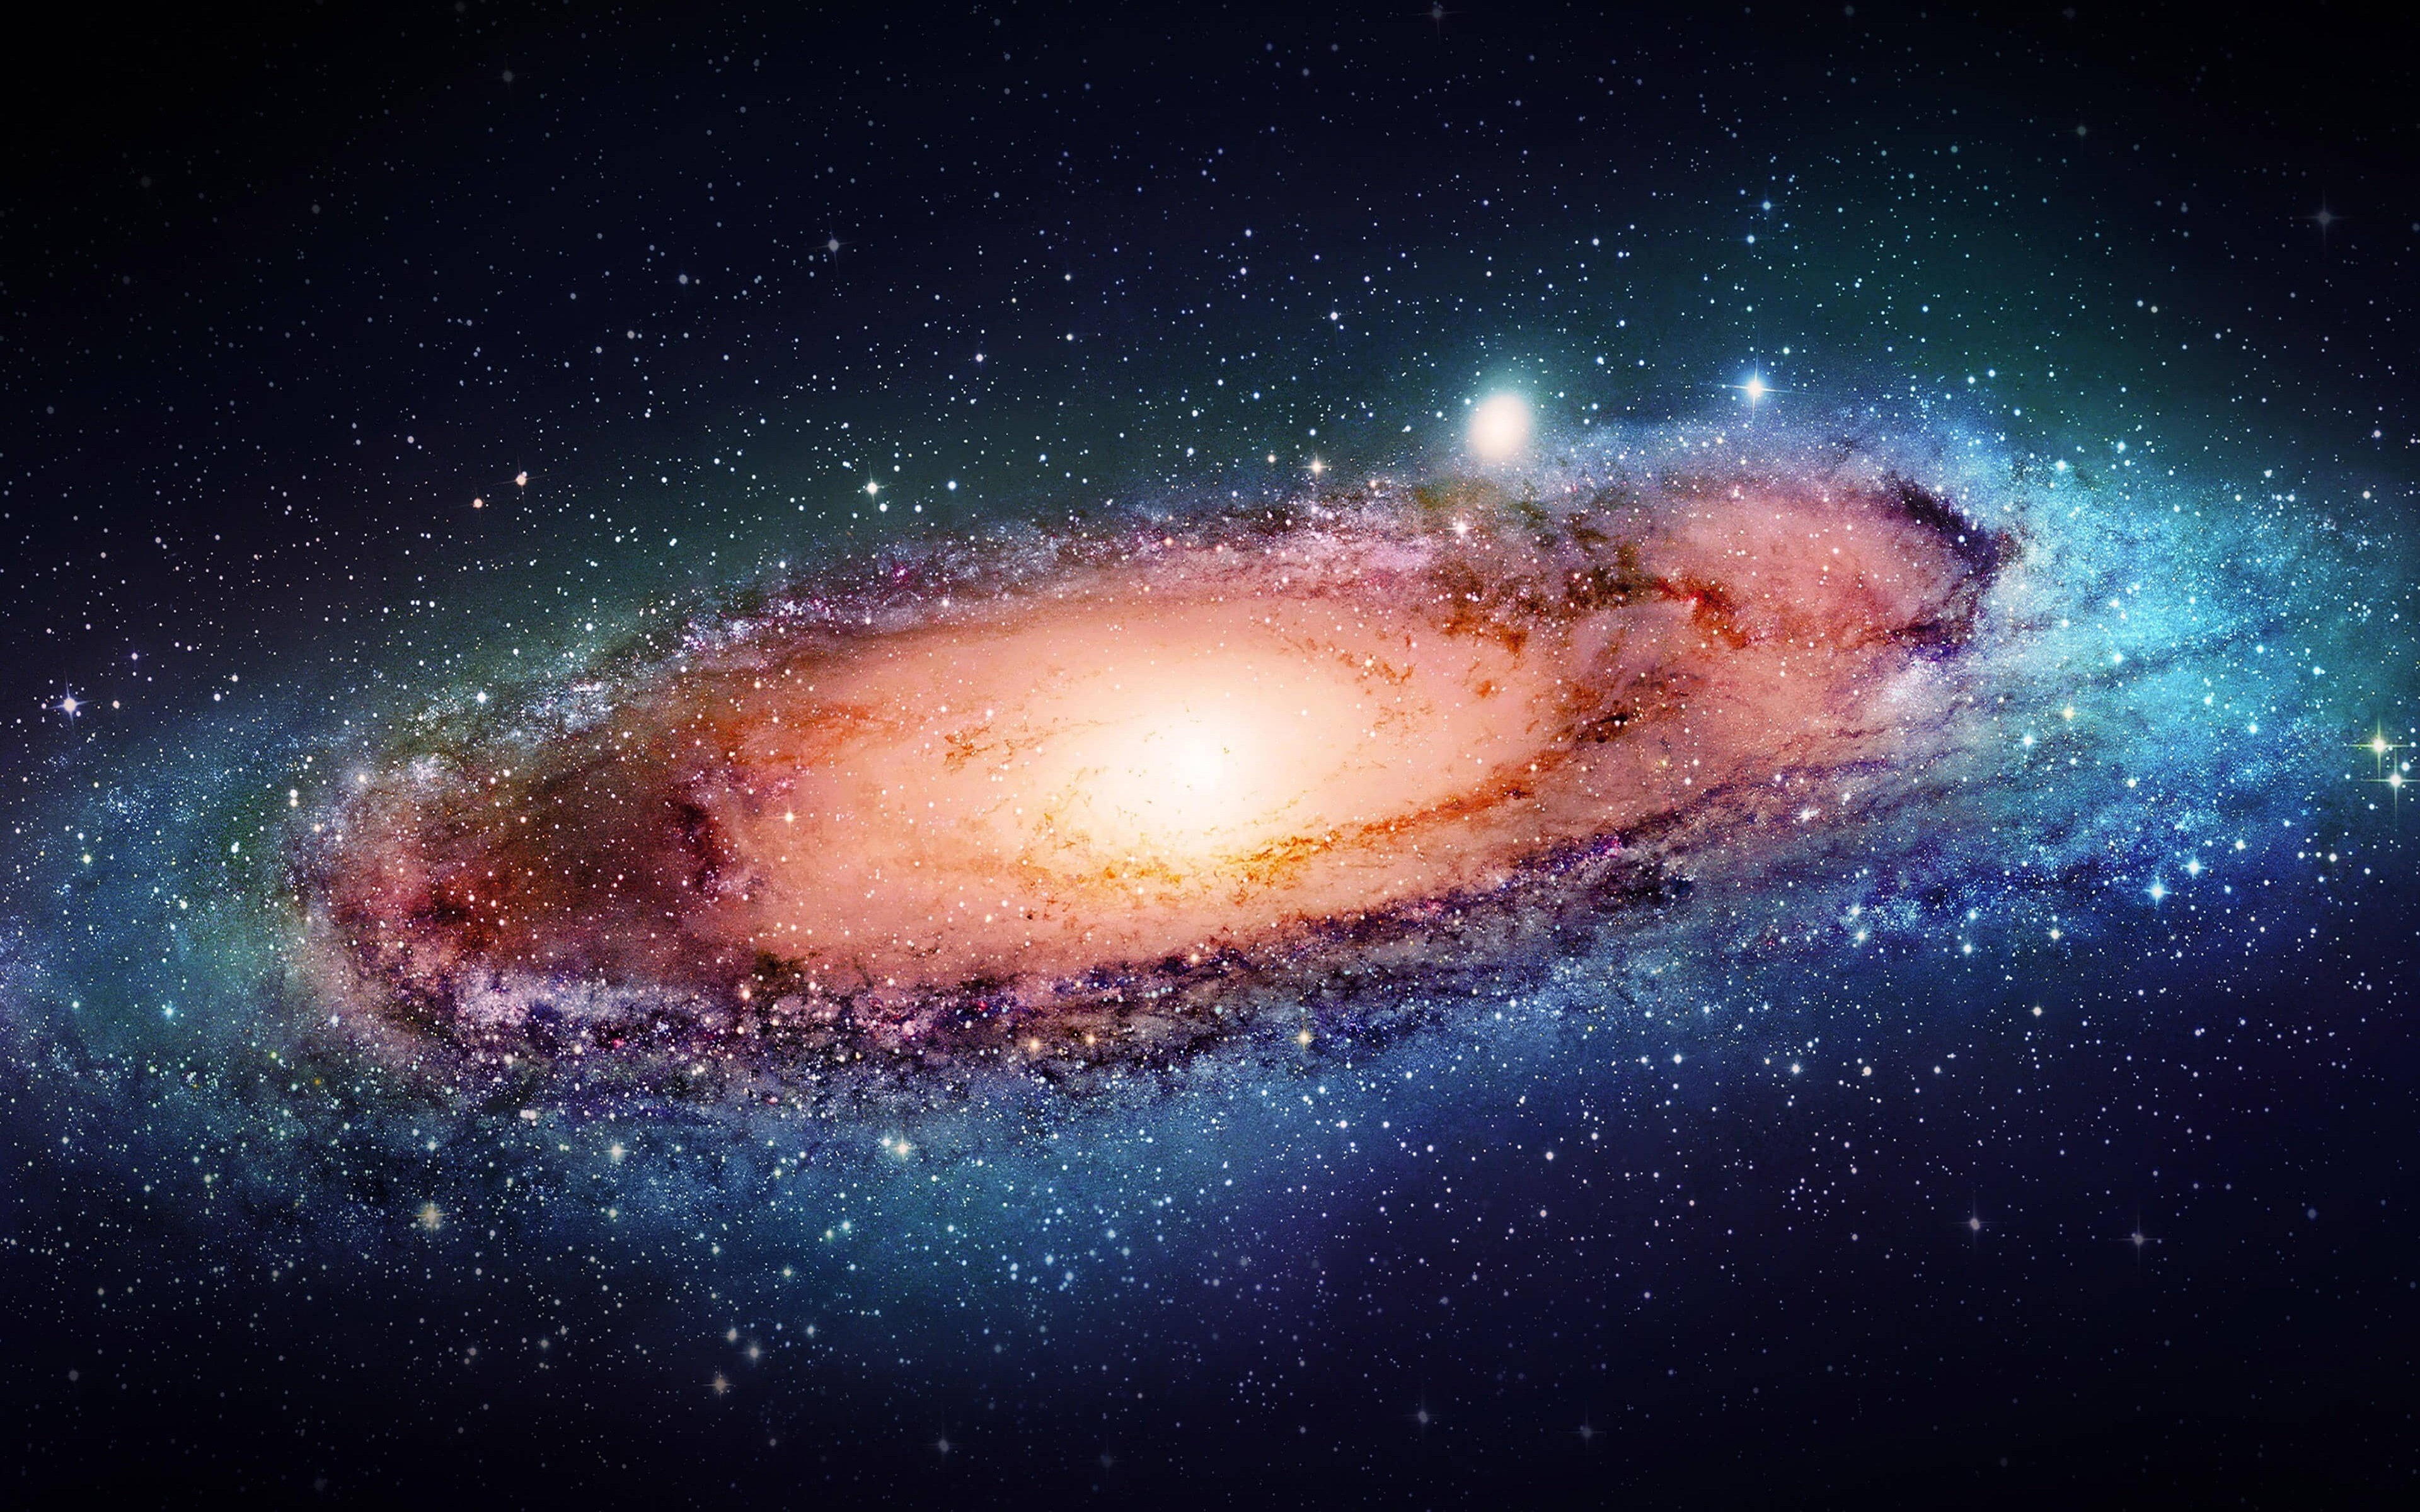 Milky Way Galaxy for 3840 x 2400 4K Retina Display resolution